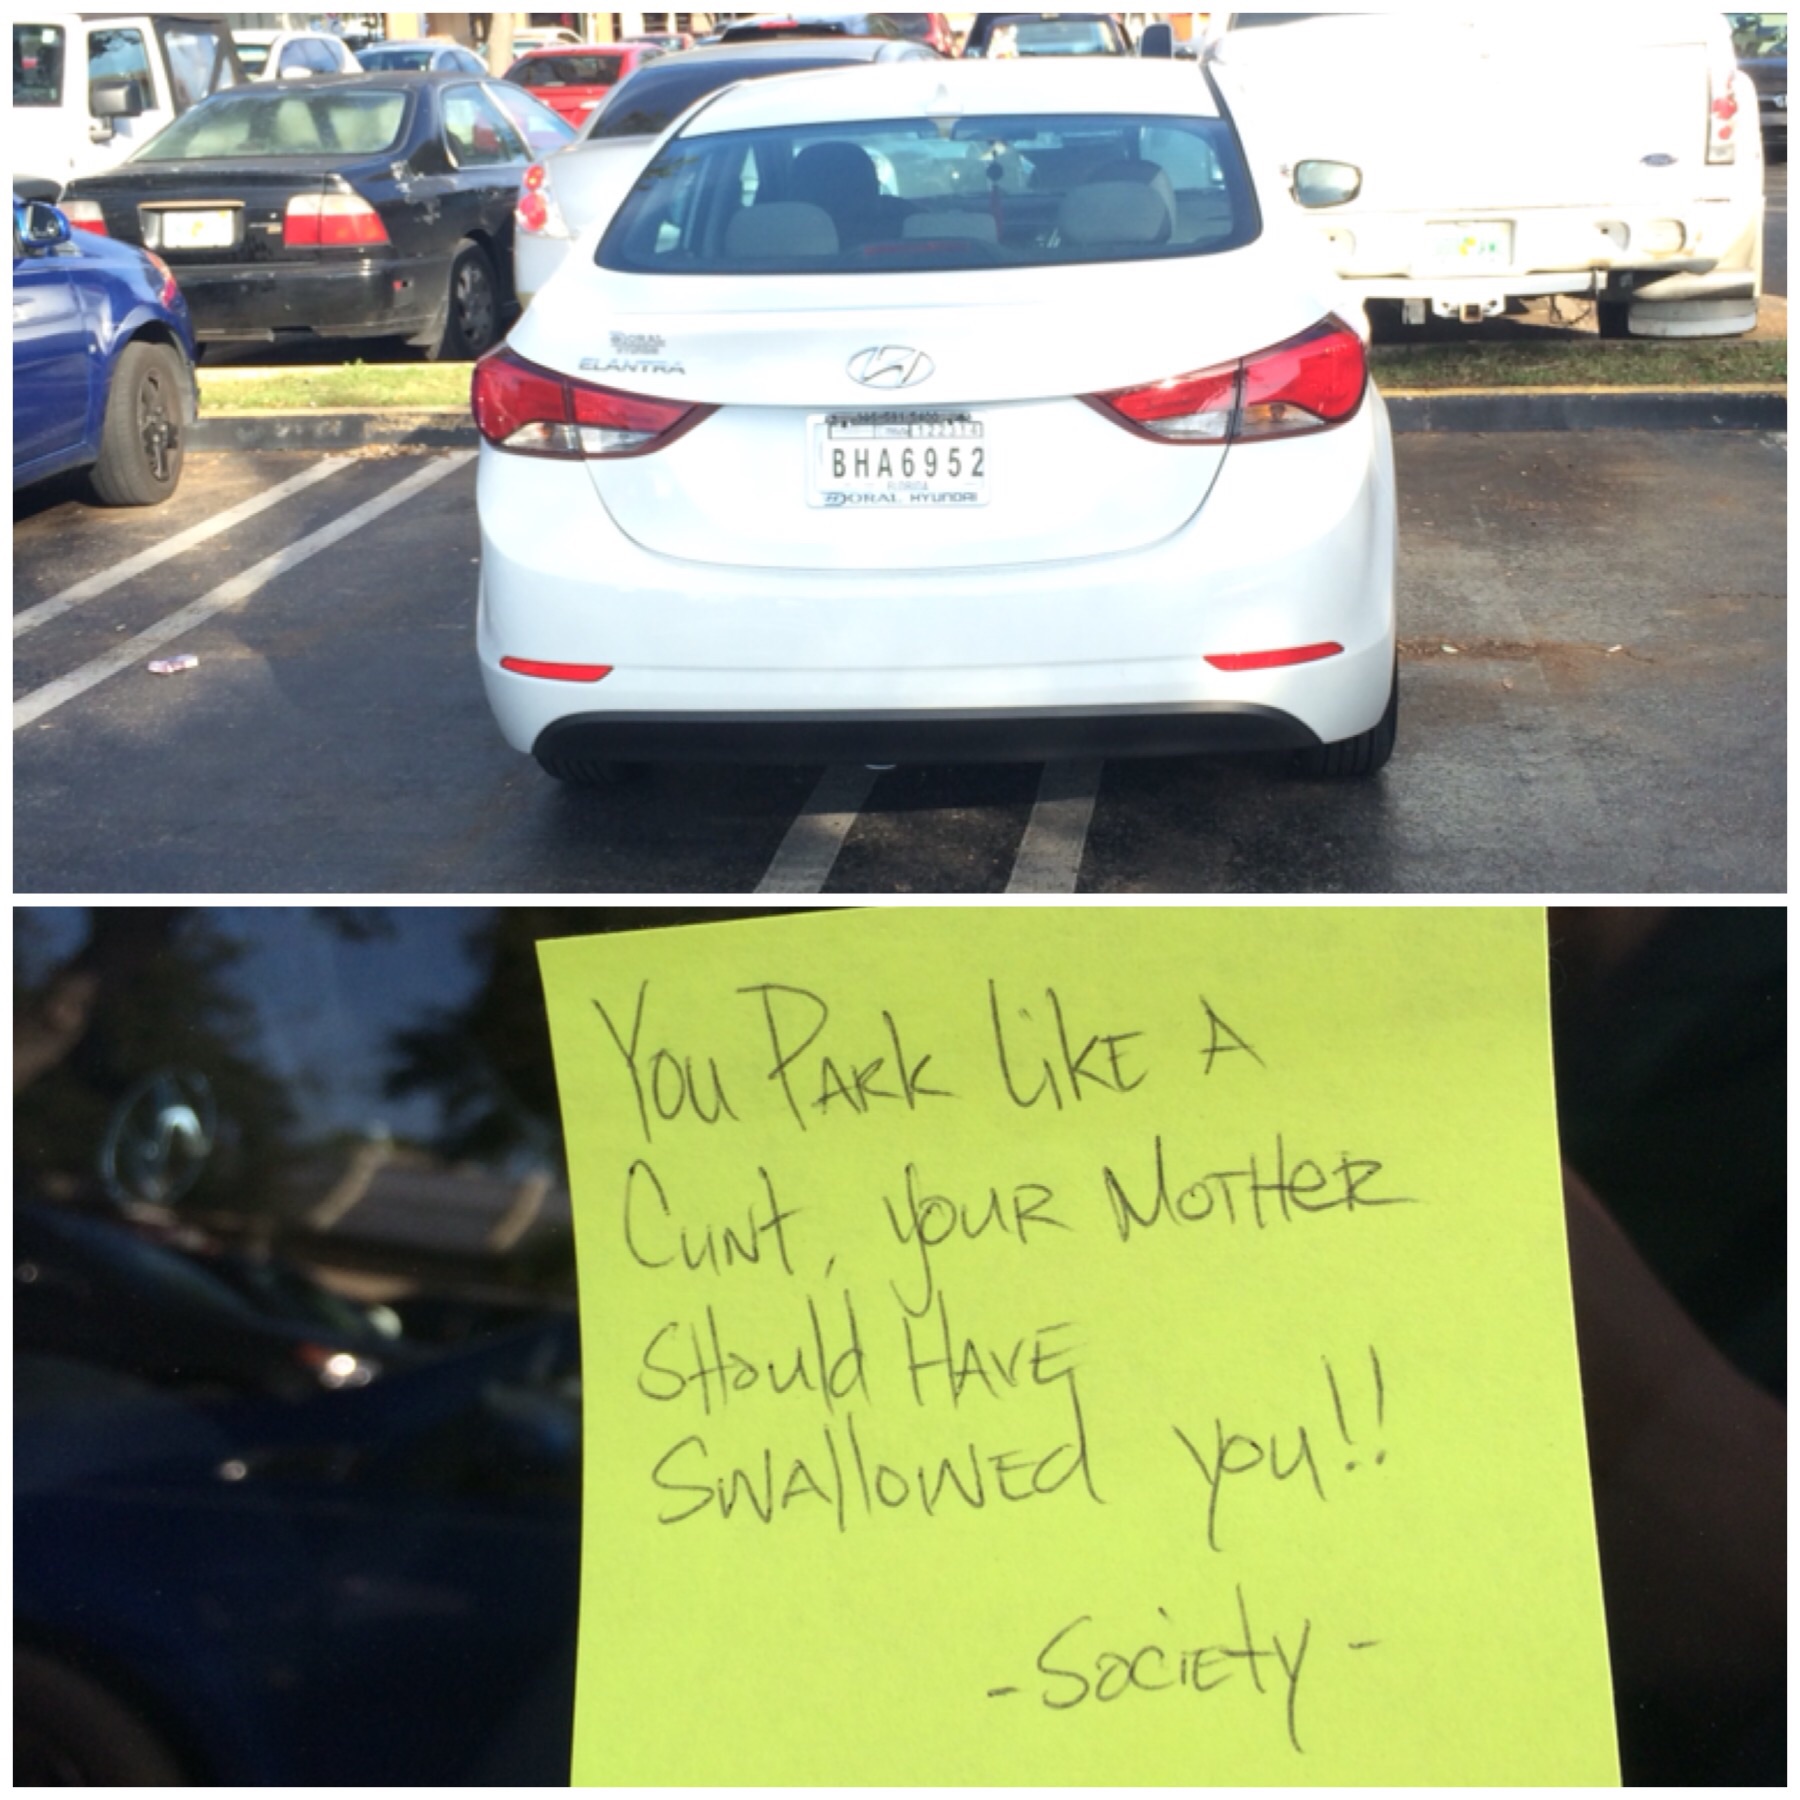 Looks like society doesn't like double parking.